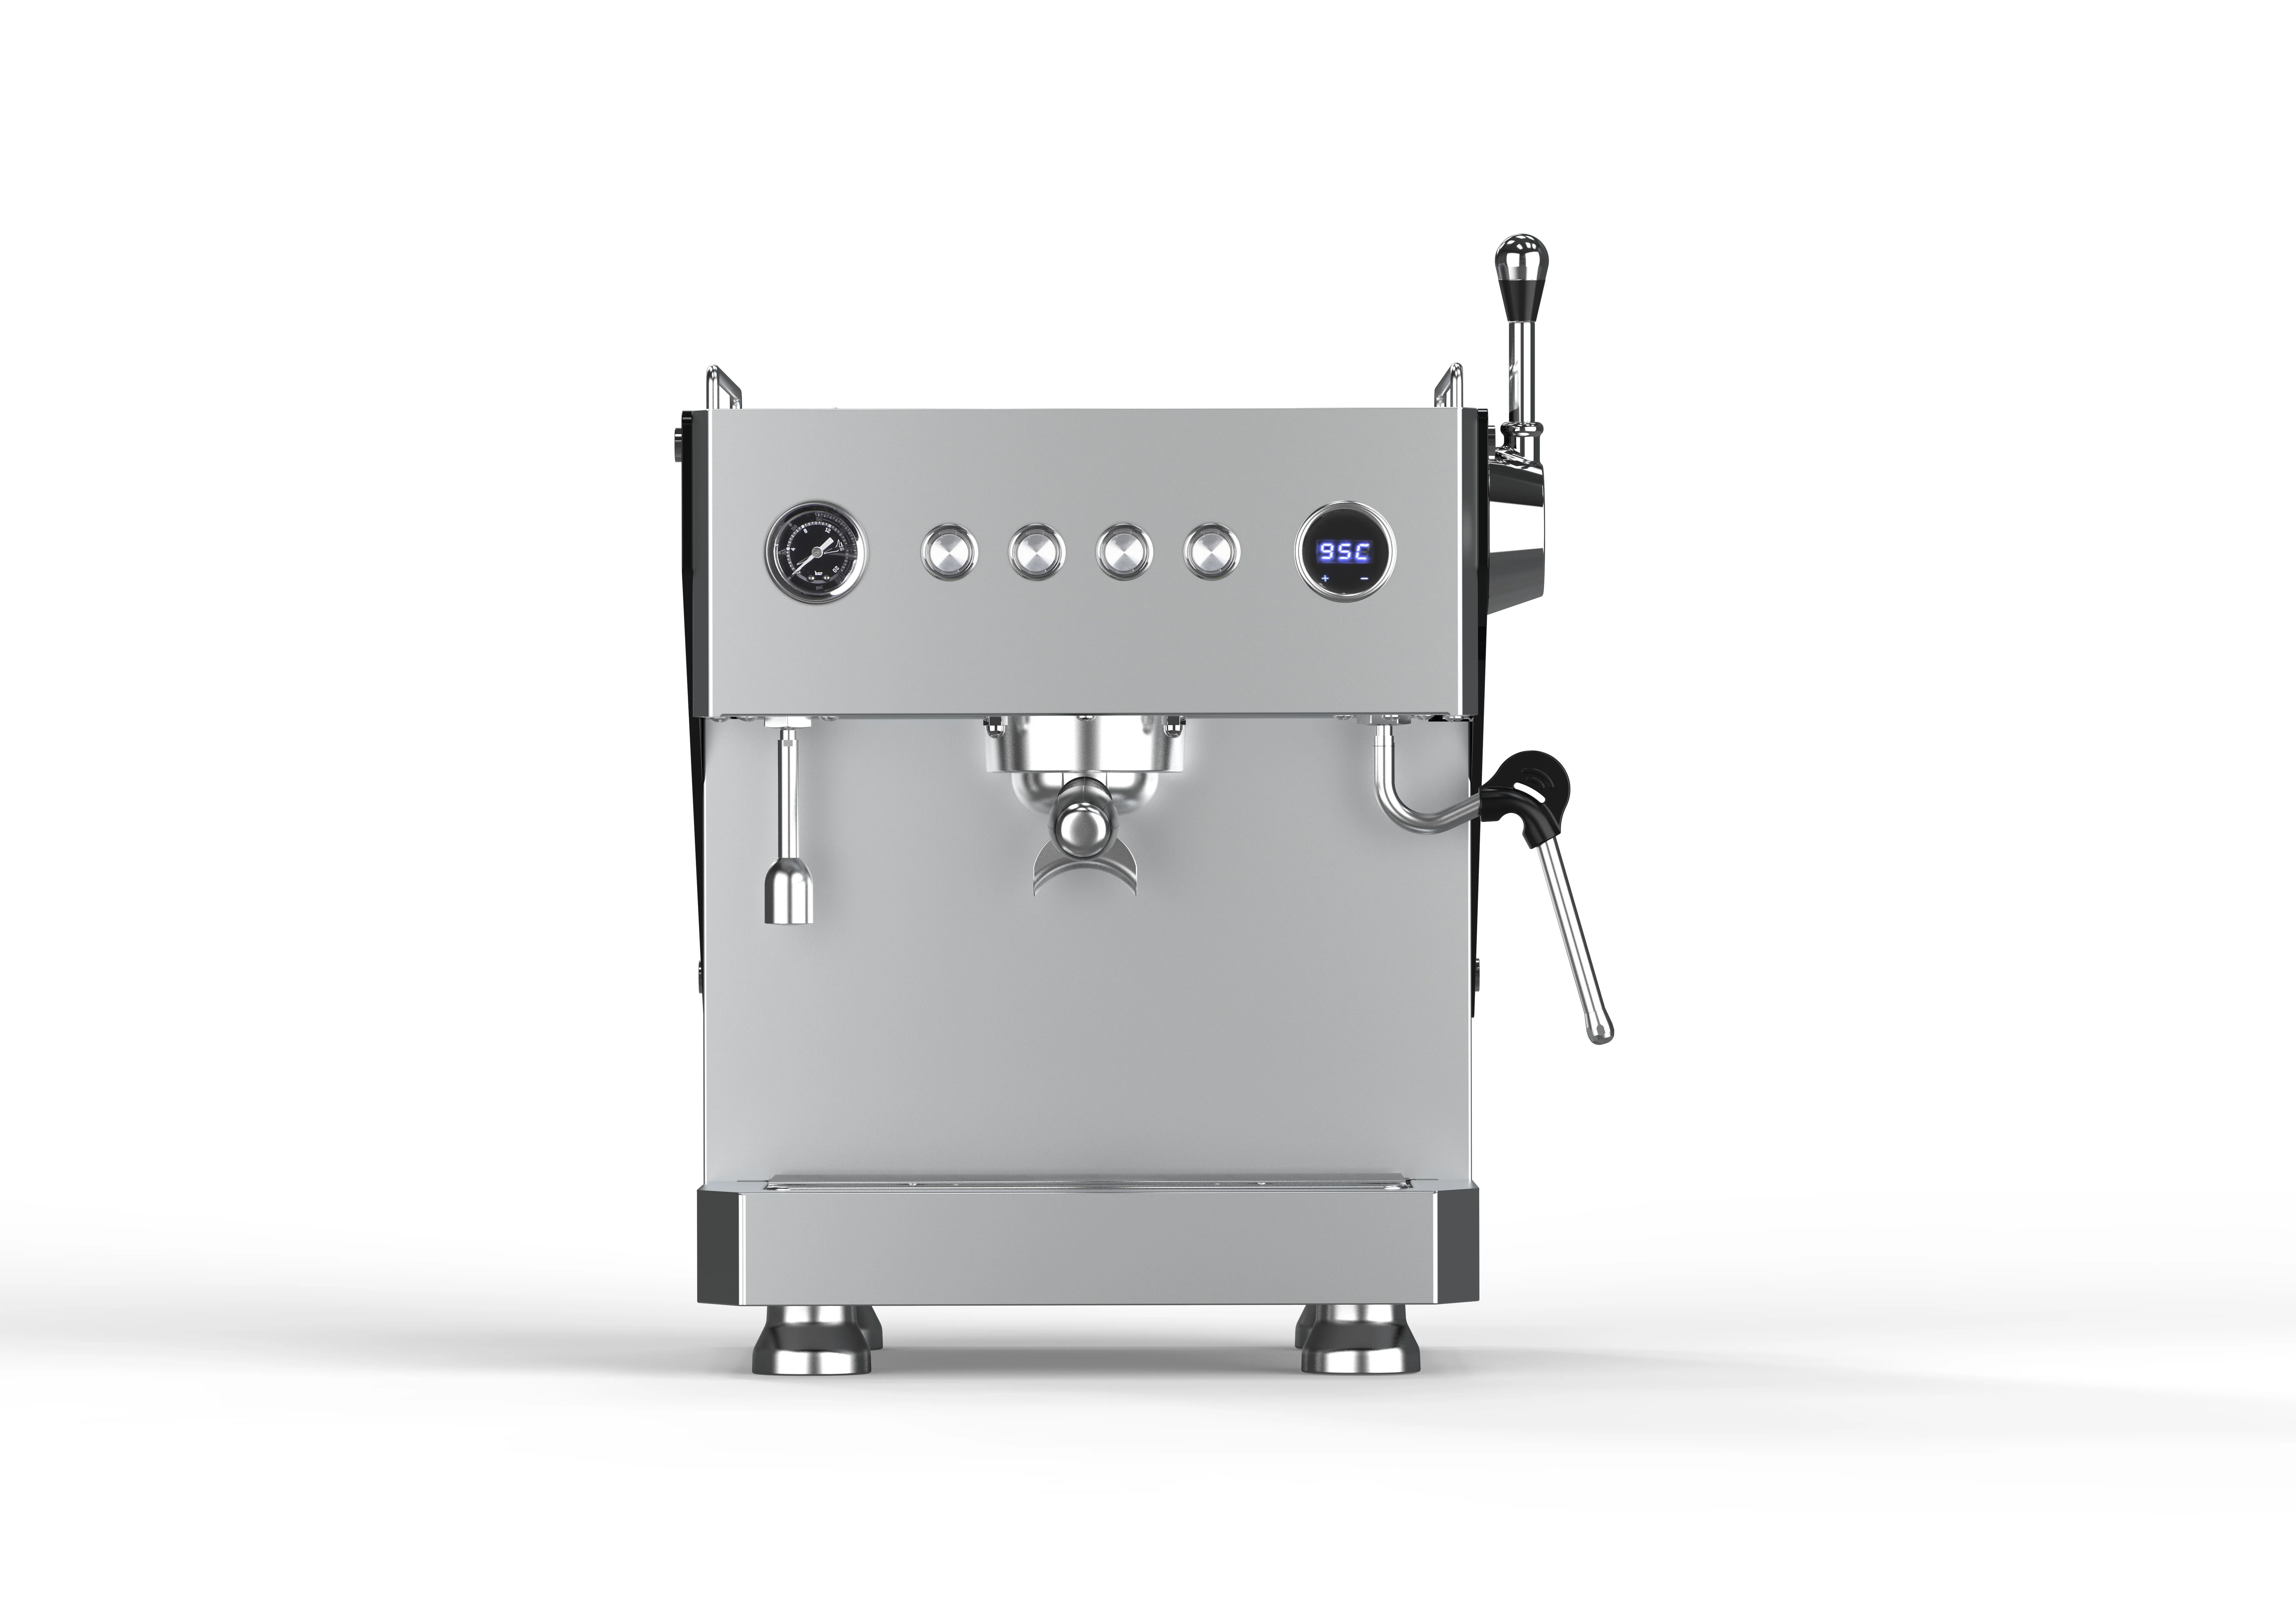 SIDEWALK SALE - Ascaso Bar 1 Group Commercial Espresso Machine